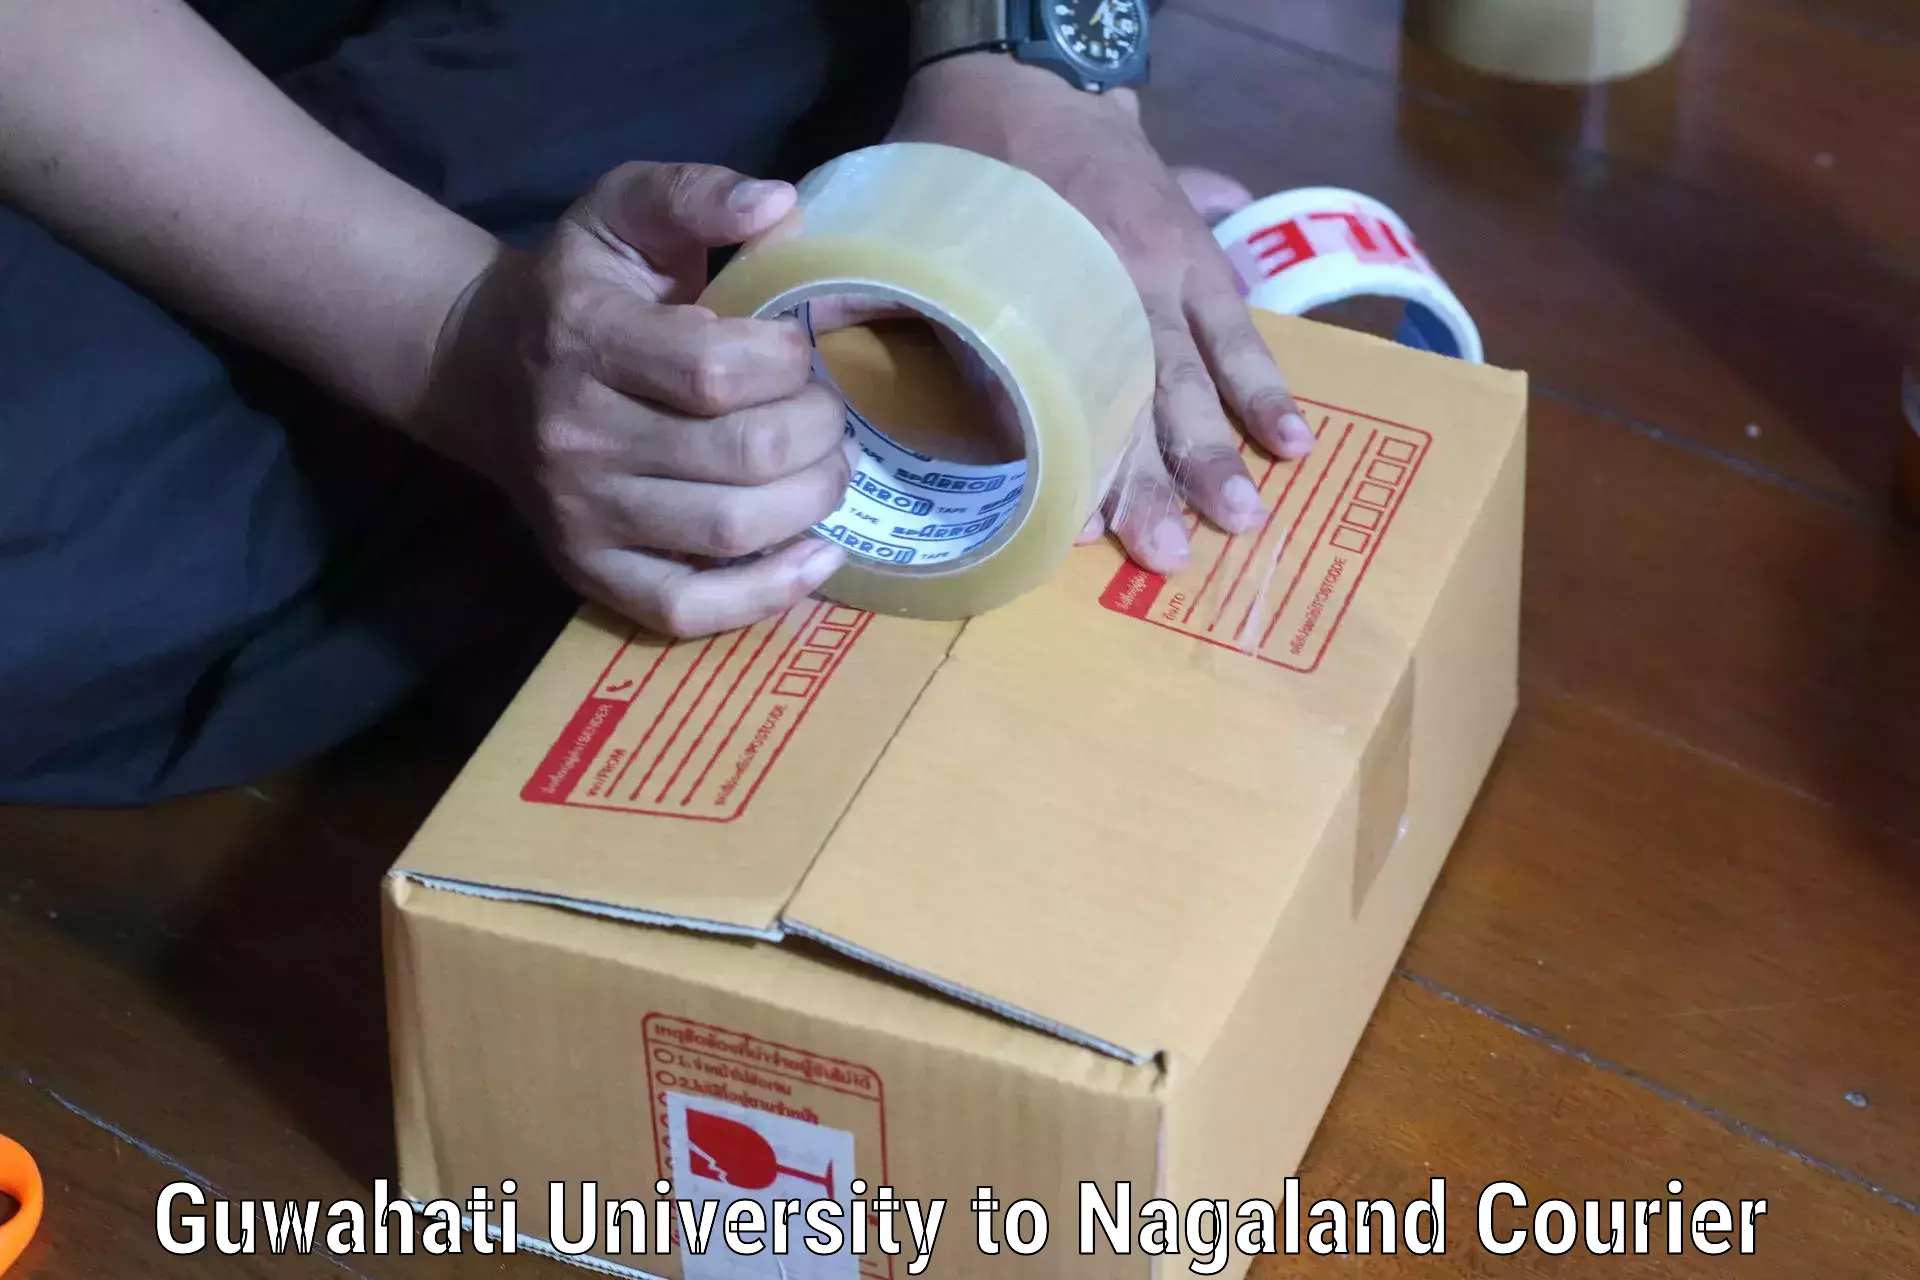 Courier service comparison Guwahati University to NIT Nagaland